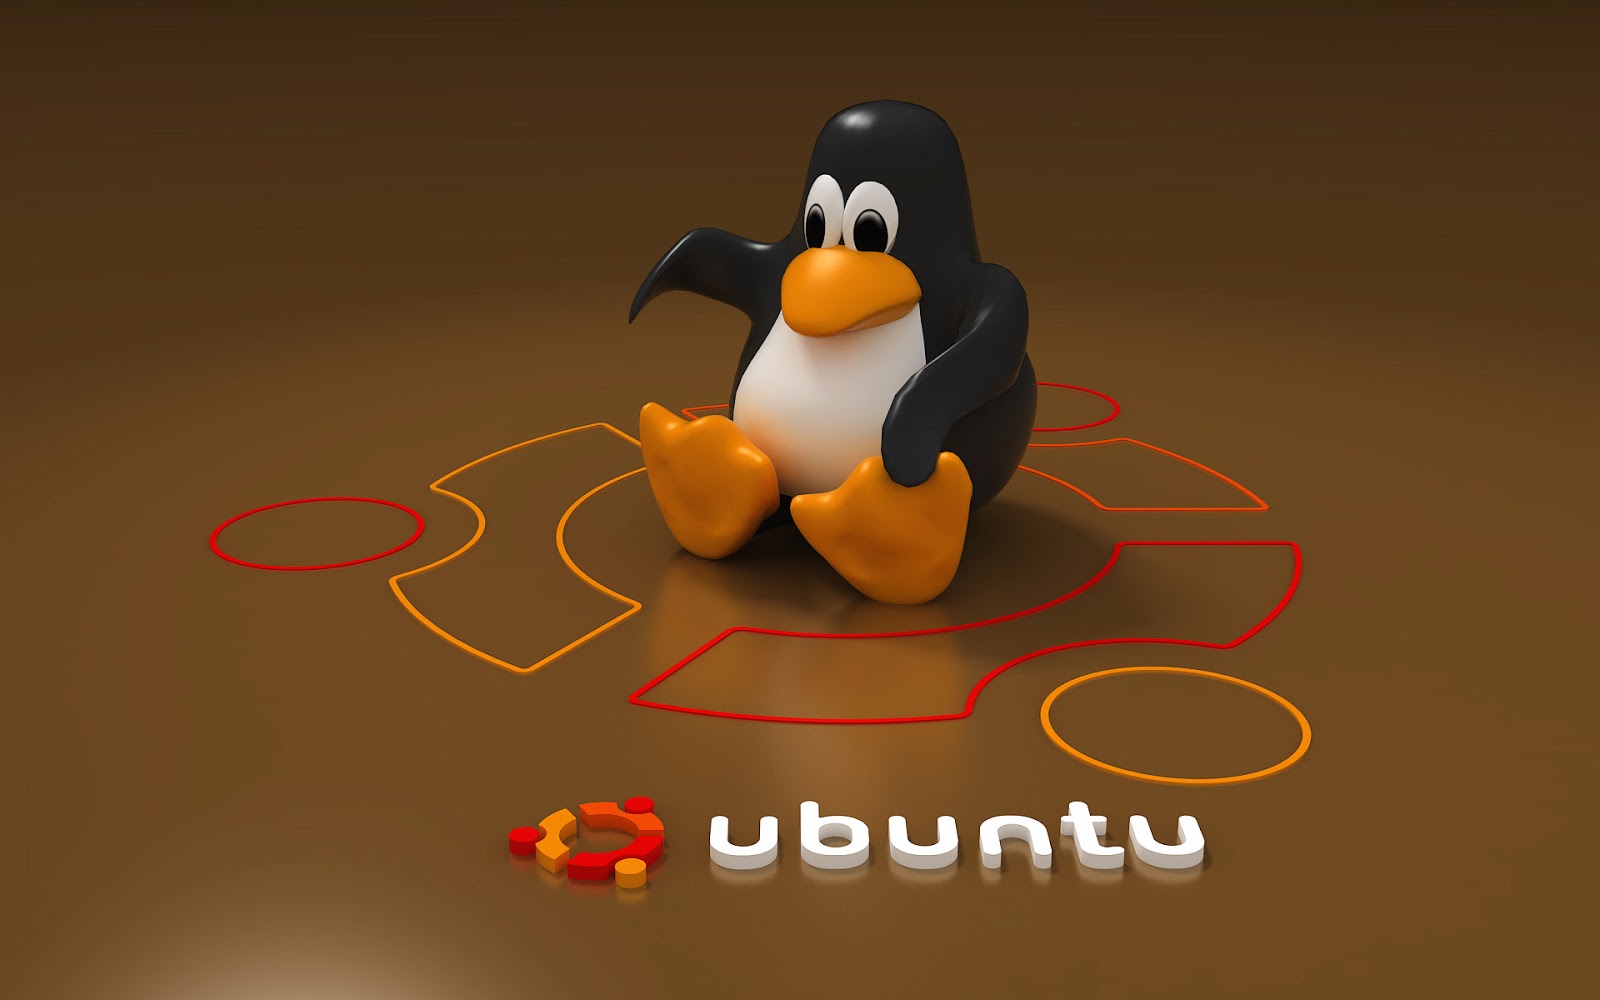 download ubuntu 14.04 image